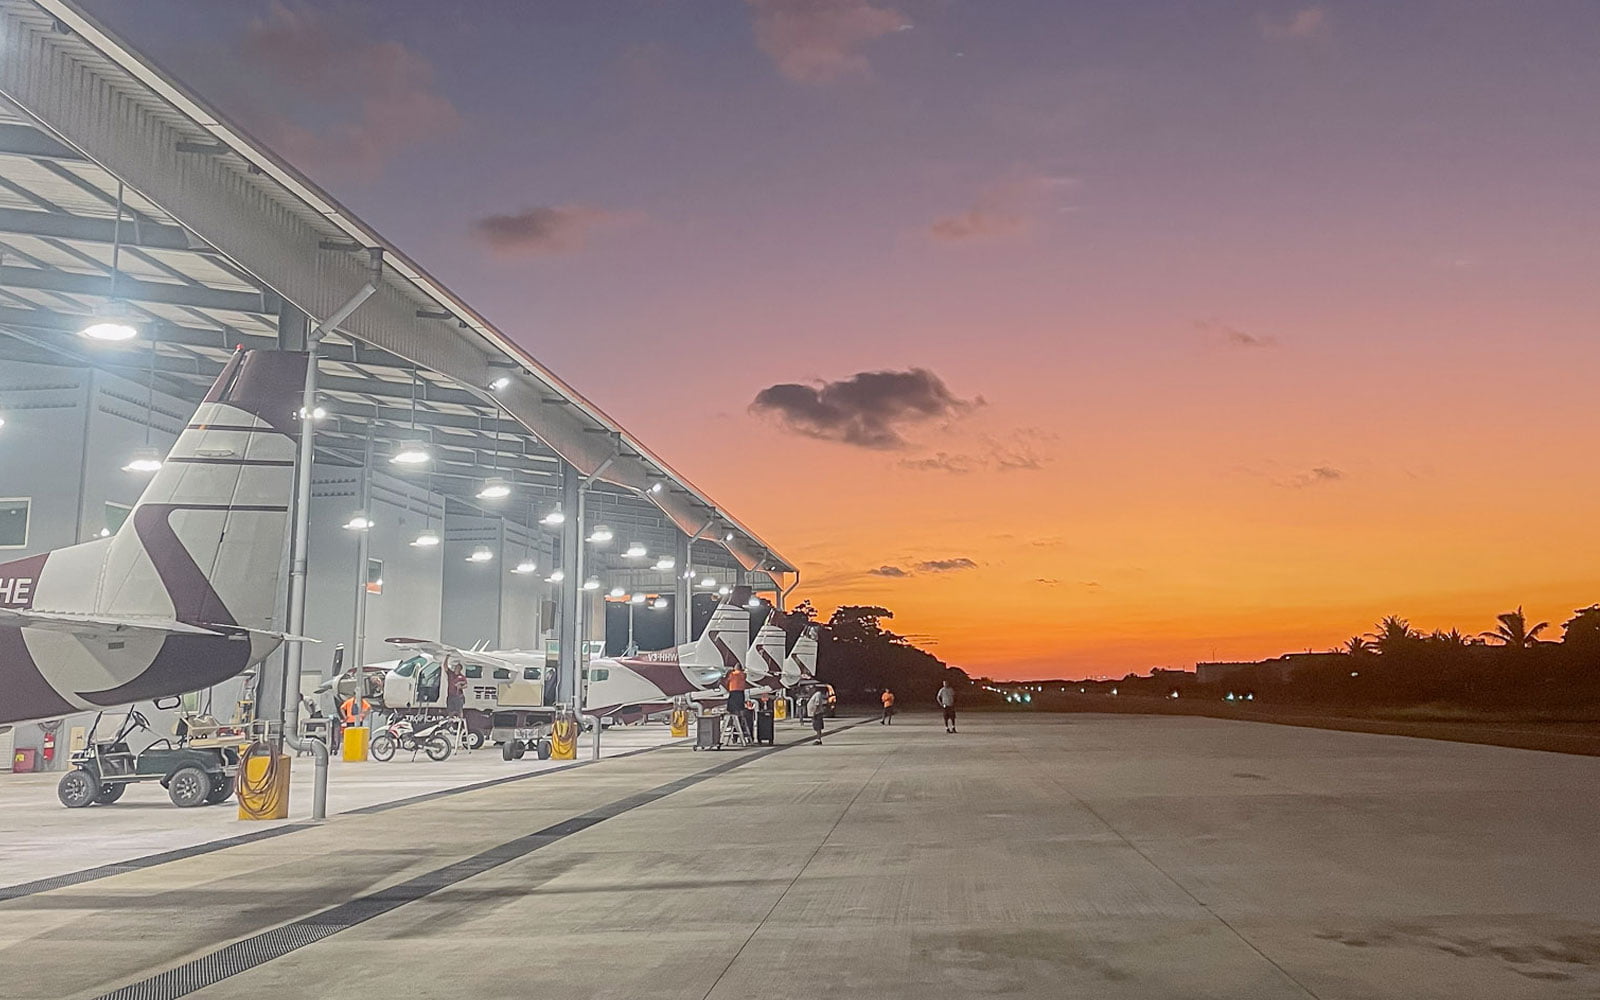 tropic air hangar sunset